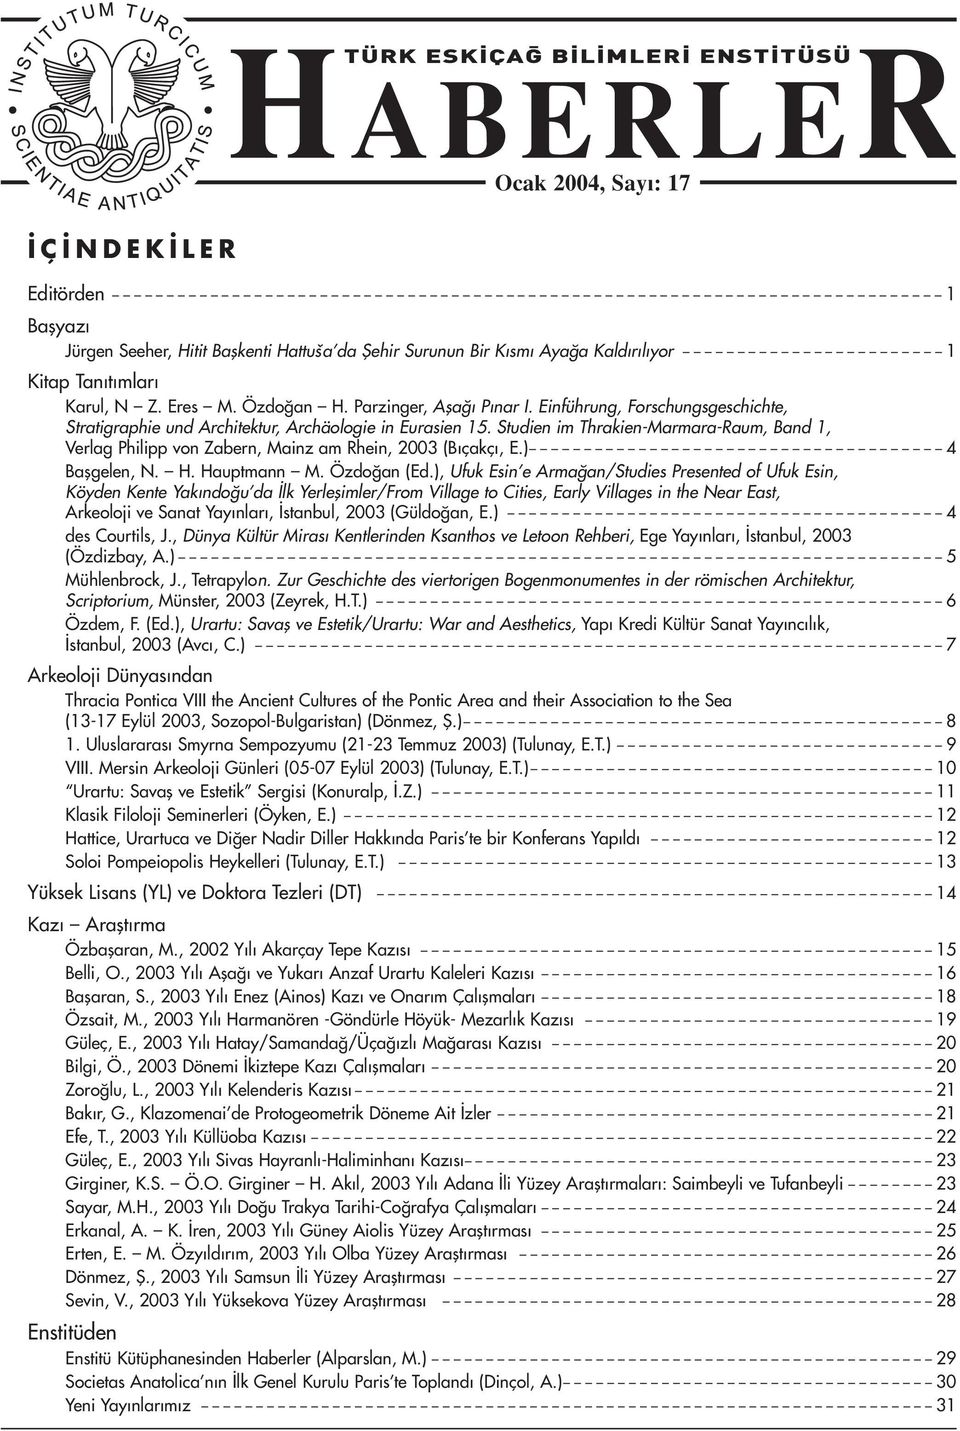 Studien im Thrakien-Marmara-Raum, Band 1, Verlag Philipp von Zabern, Mainz am Rhein, 2003 (B çakç, E.) 4 Baflgelen, N. H. Hauptmann M. Özdo an (Ed.